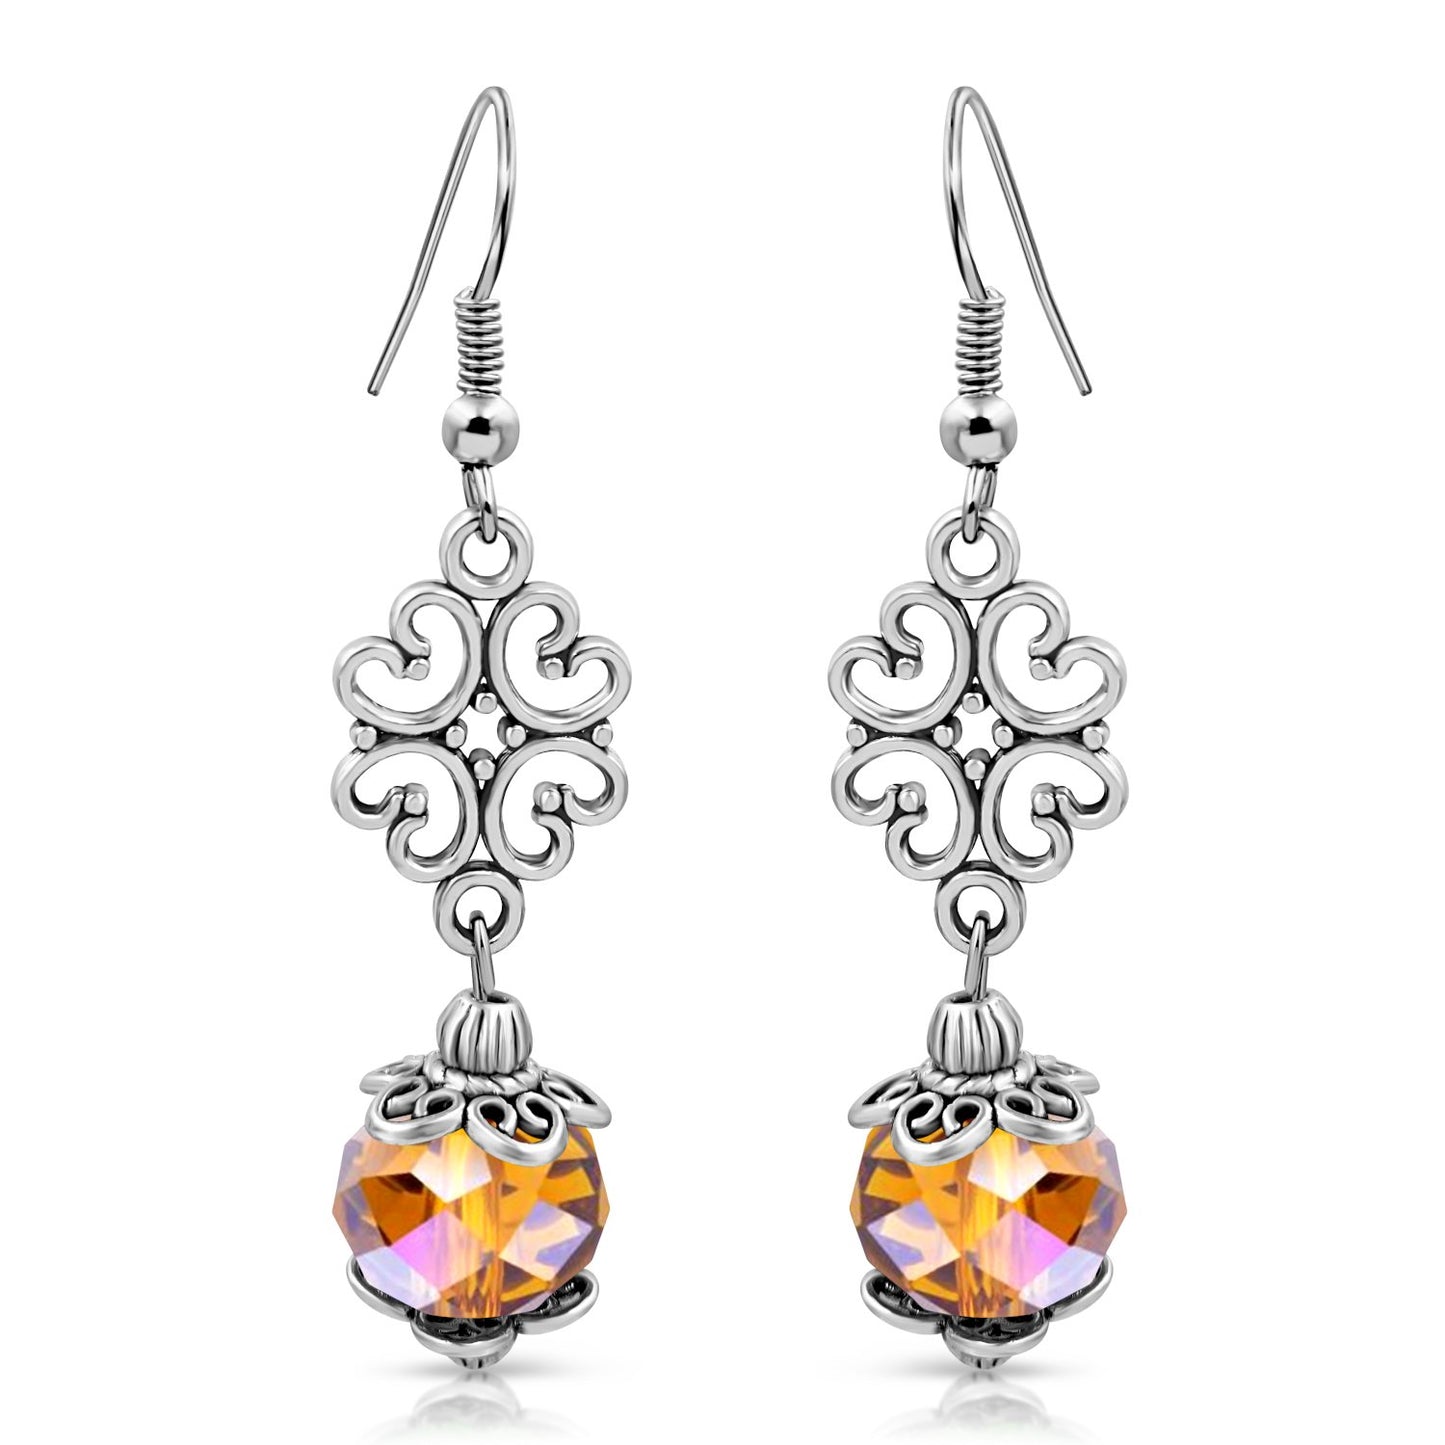 BESHEEK Silvertone Ornament and Clear Gold AB Crystal Dangle Earrings | Handmade Hypoallergenic Boho Beach Gala Wedding Style Fashion Earrings